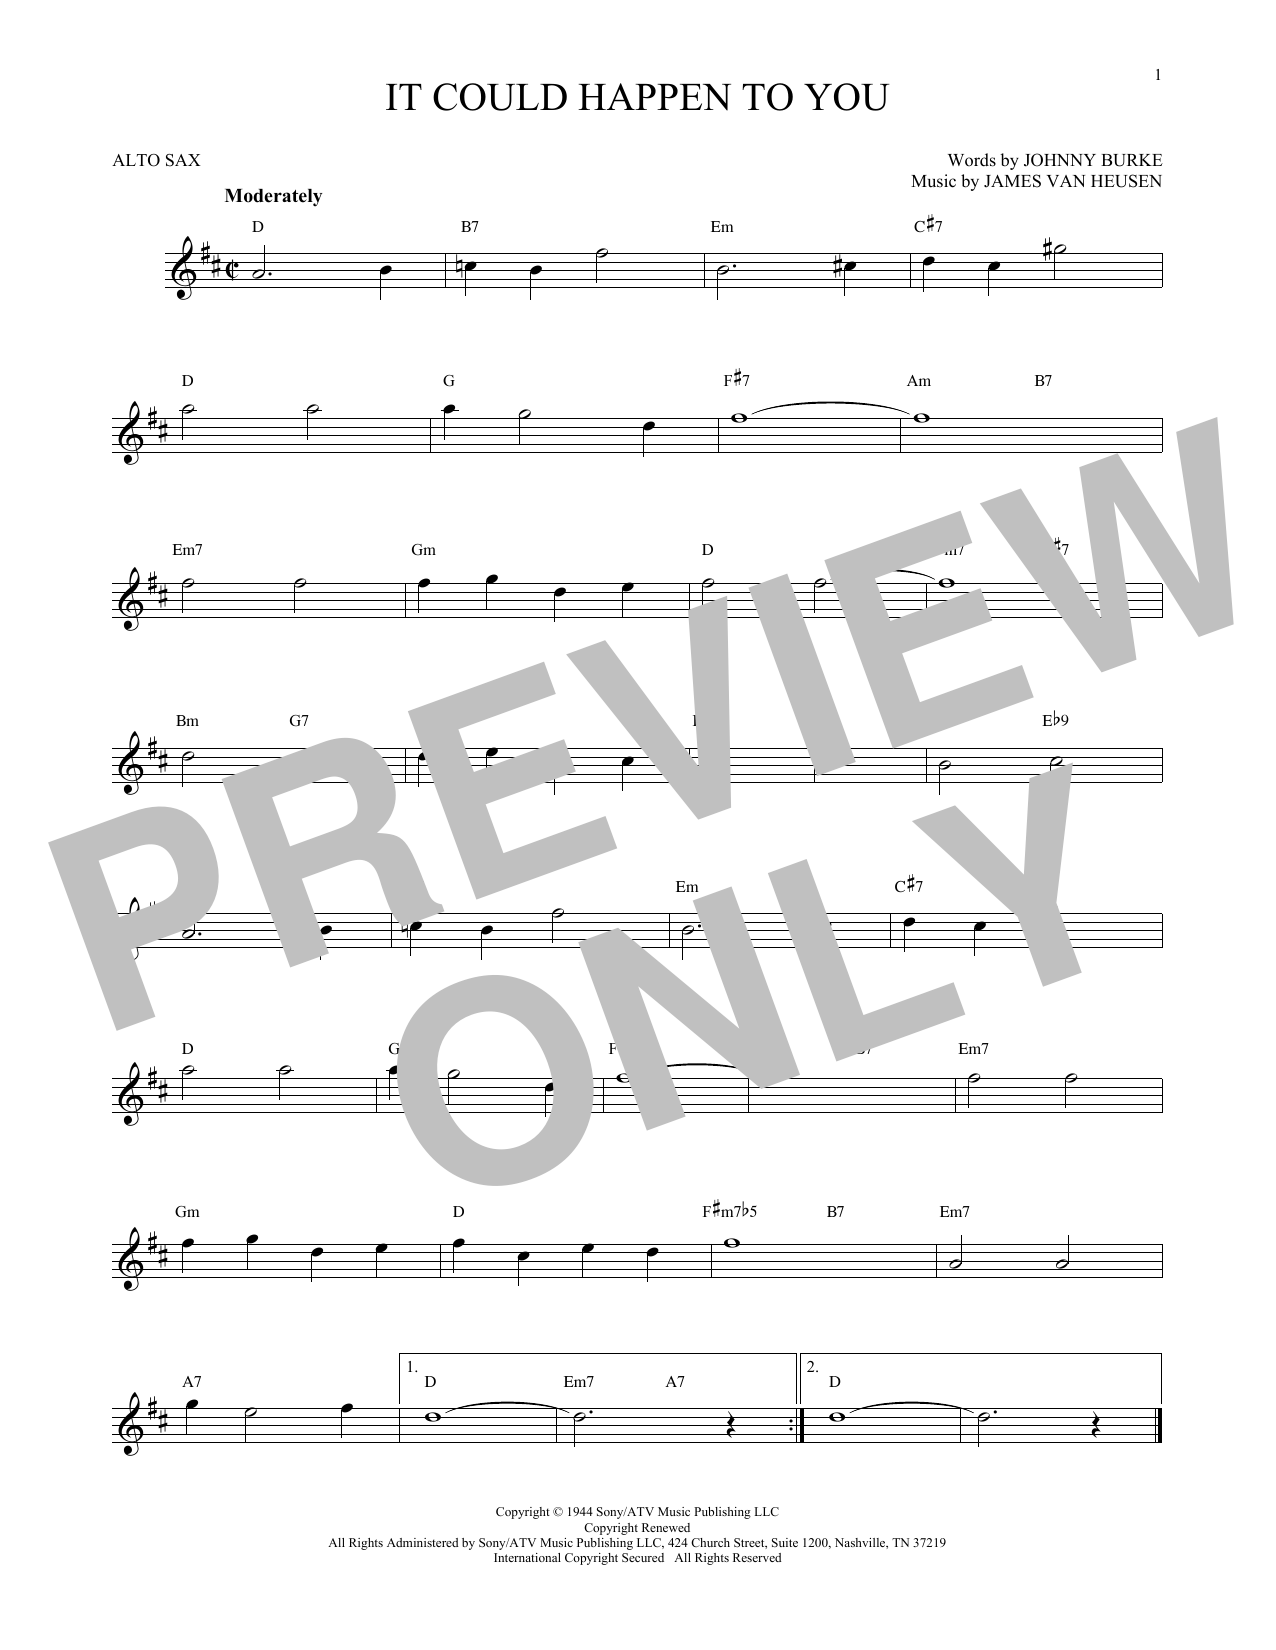 James Van Heusen It Could Happen To You Sheet Music Notes & Chords for Ukulele - Download or Print PDF